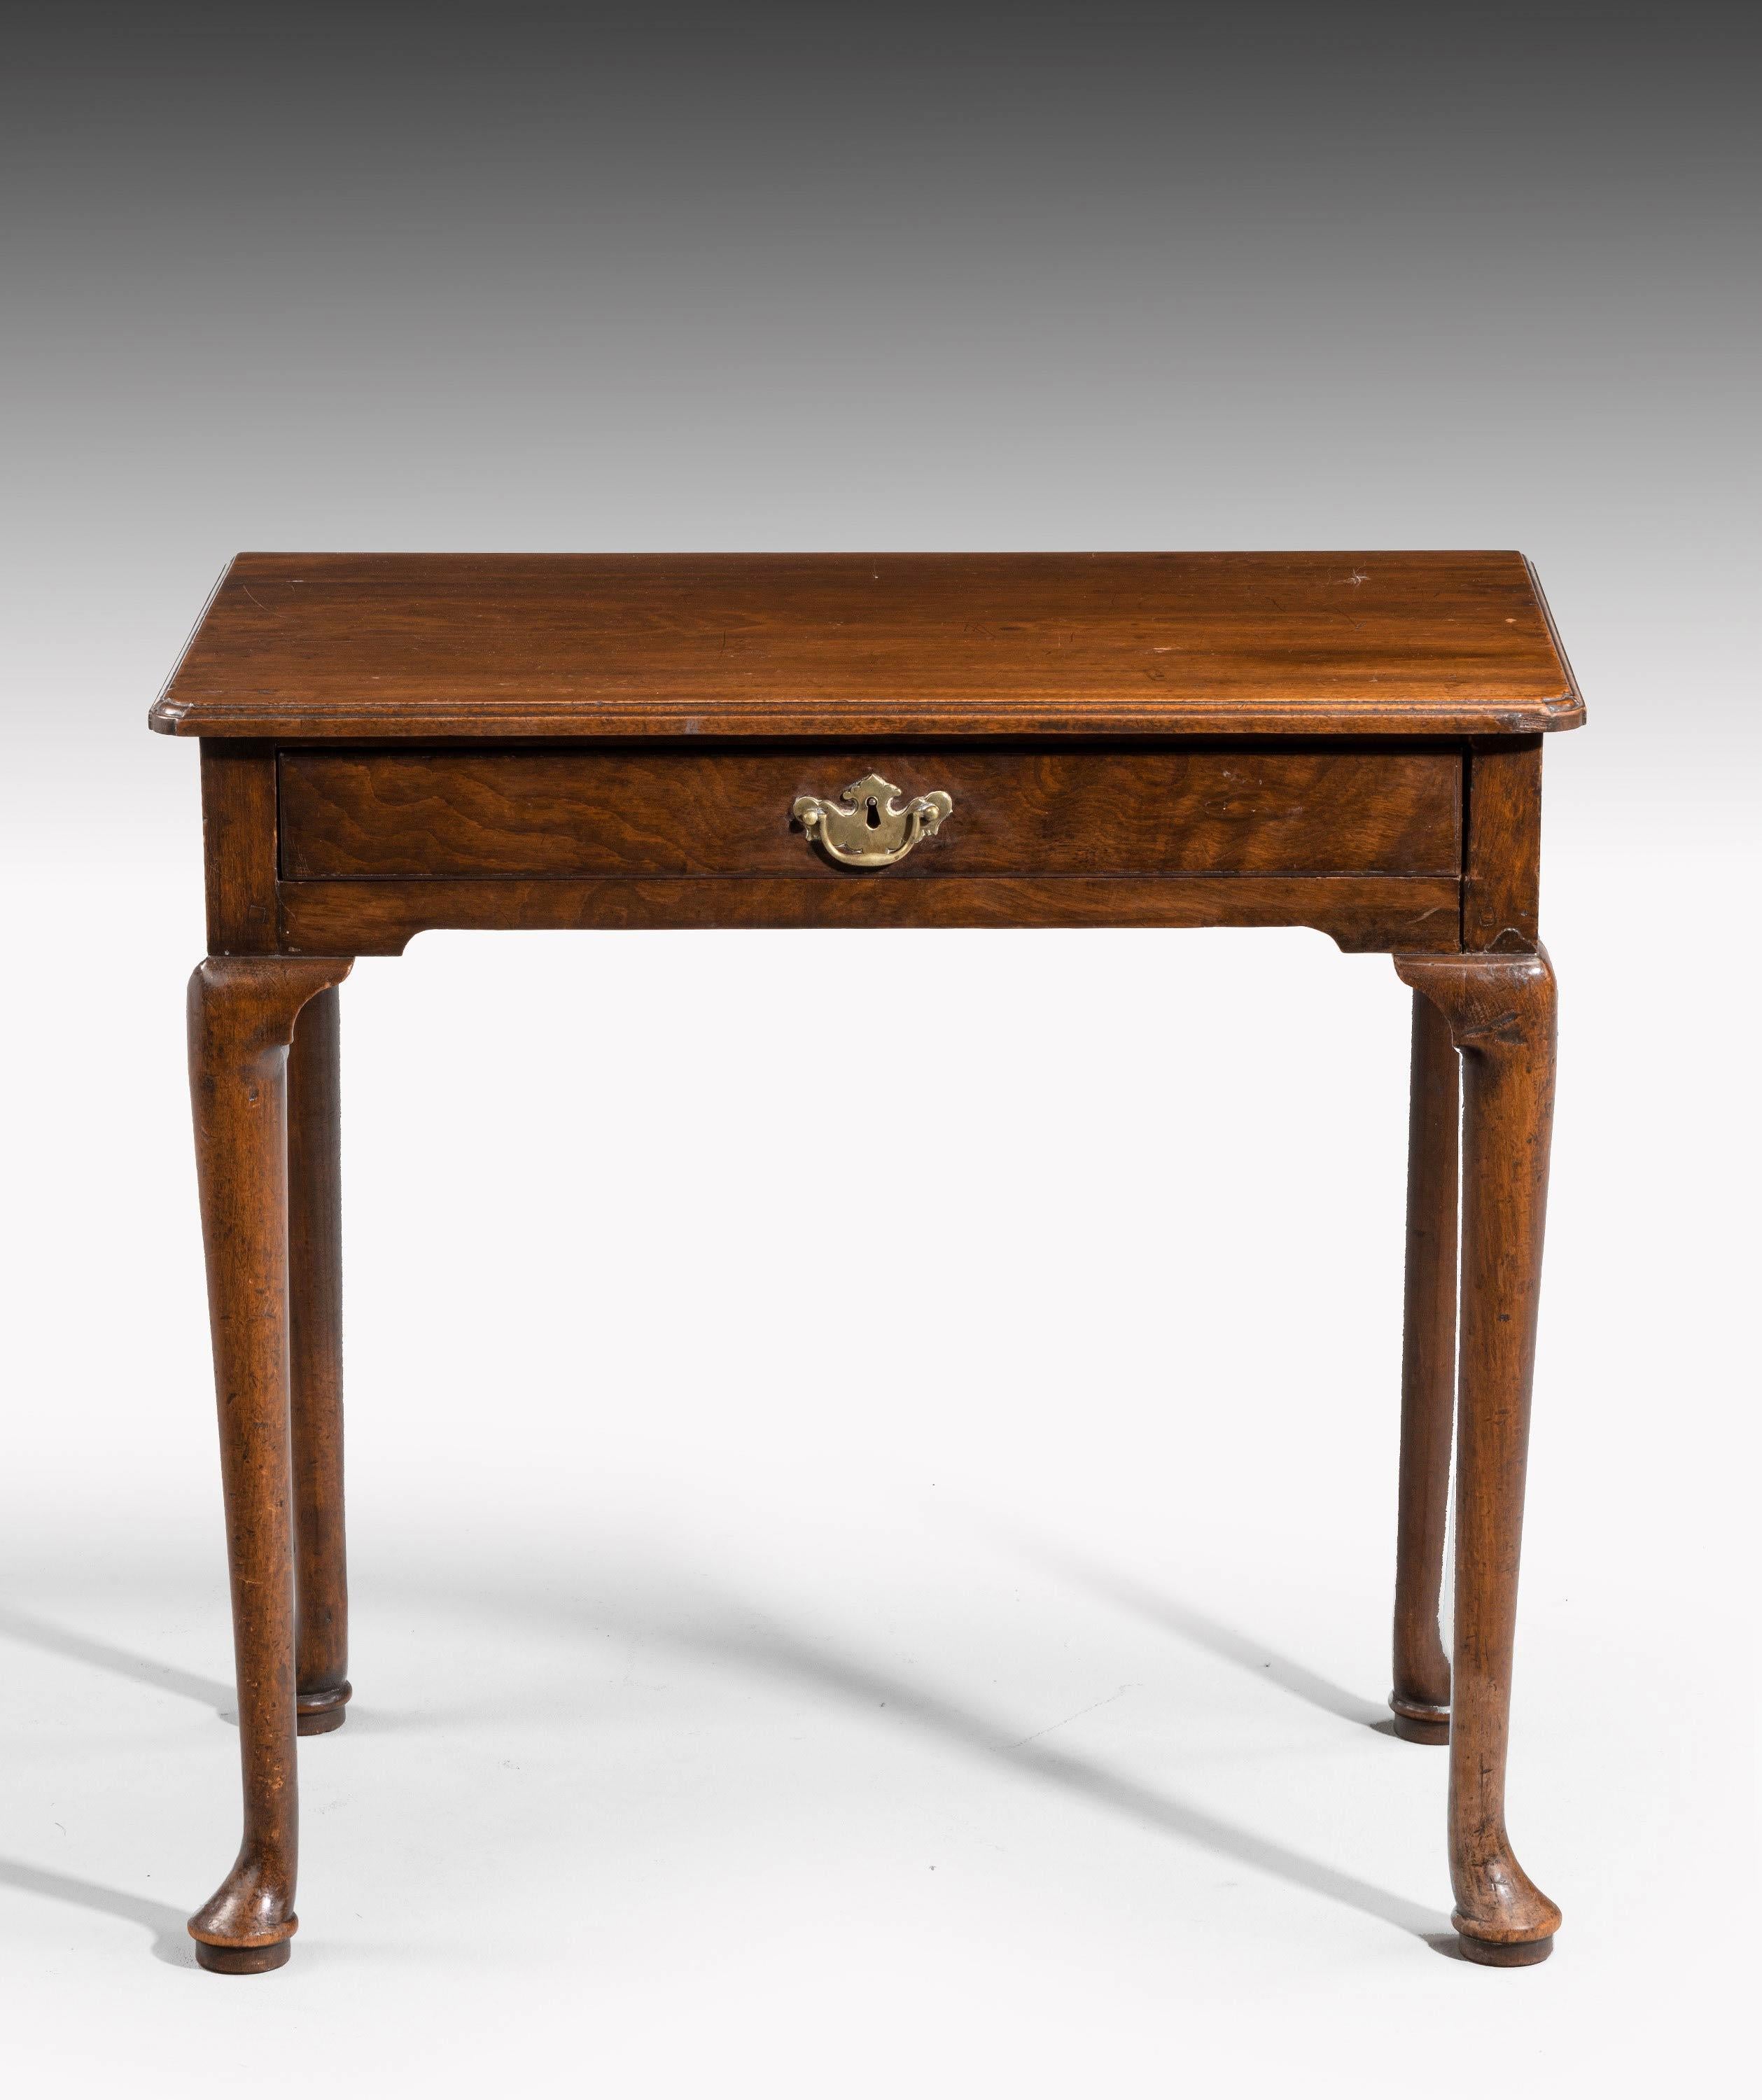 English George III Period Mahogany Side Table